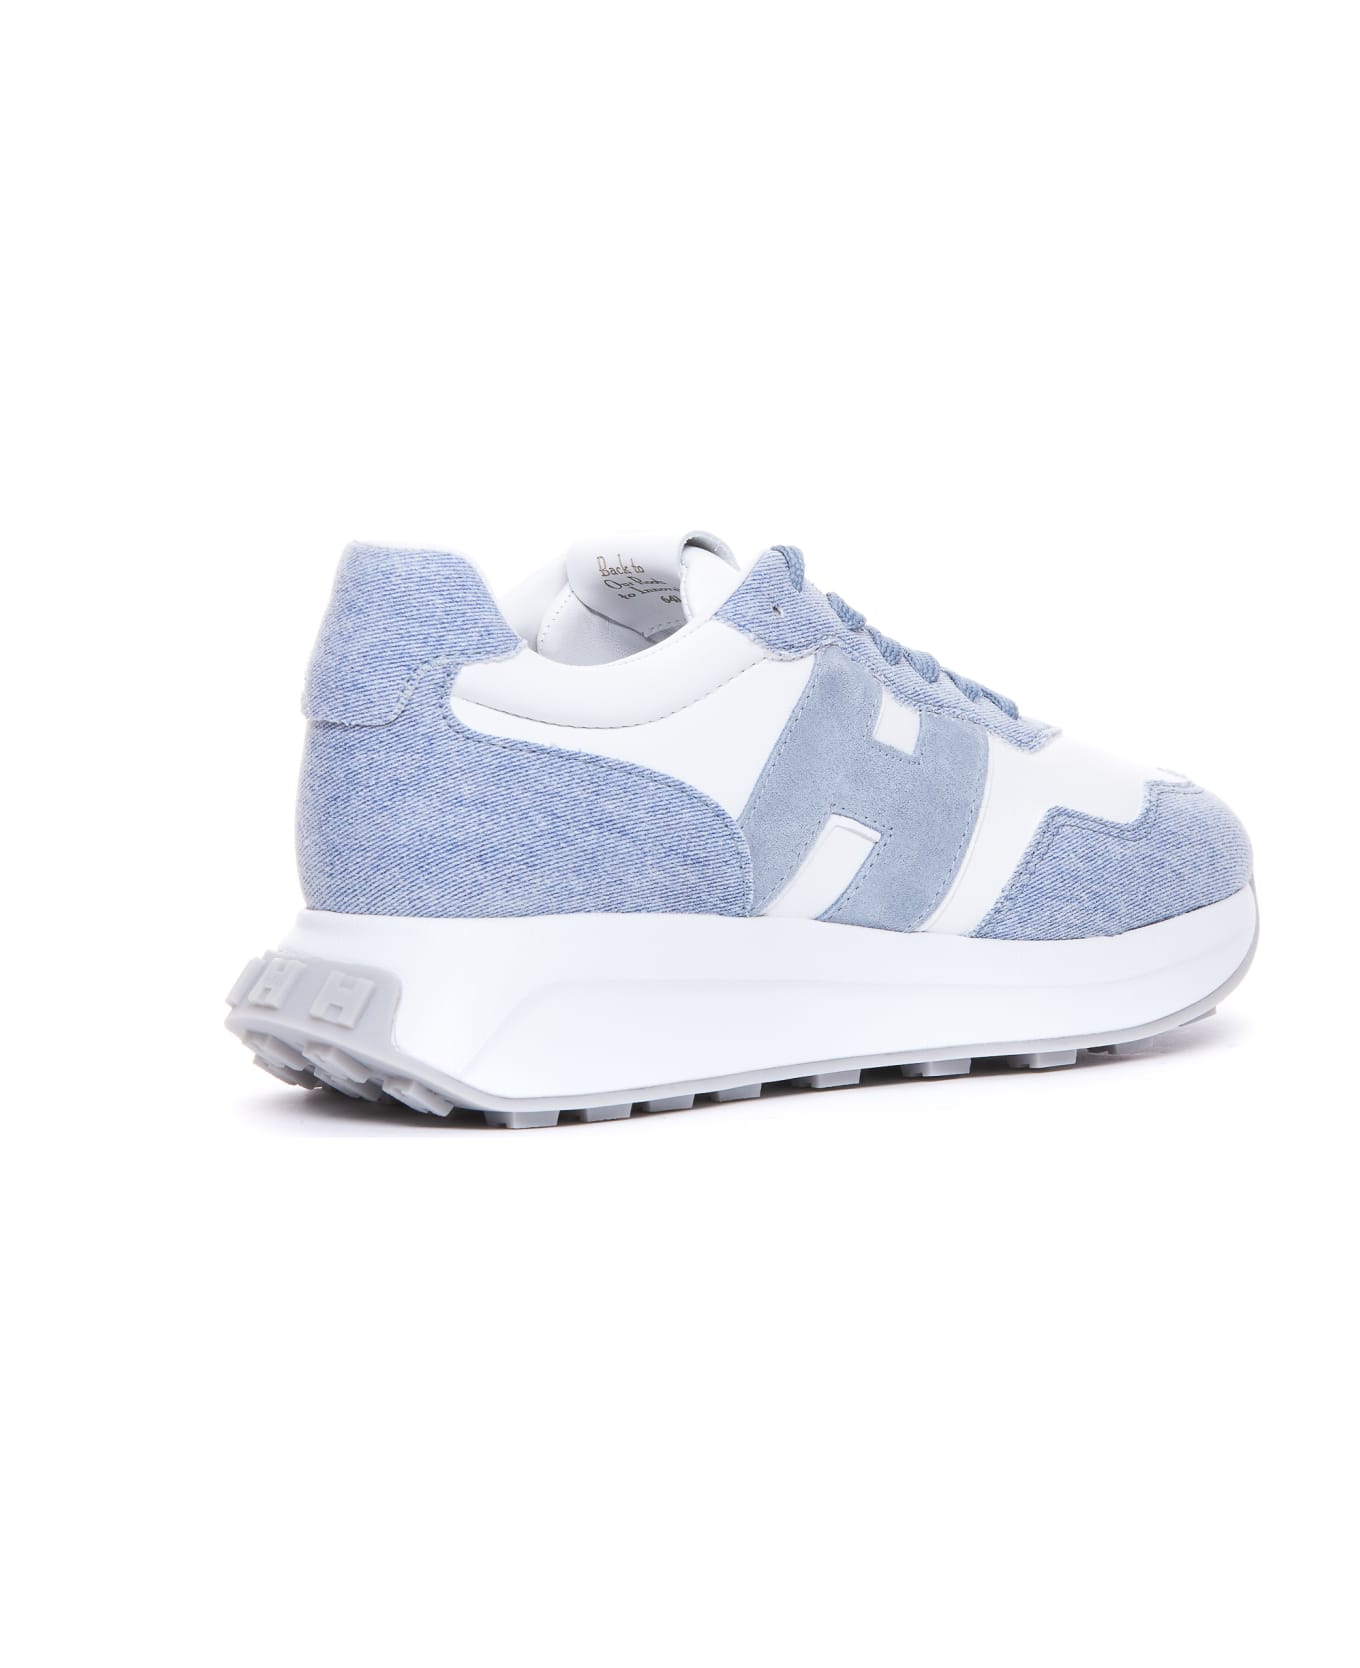 Hogan H641 H Patch Sneakers - Blue